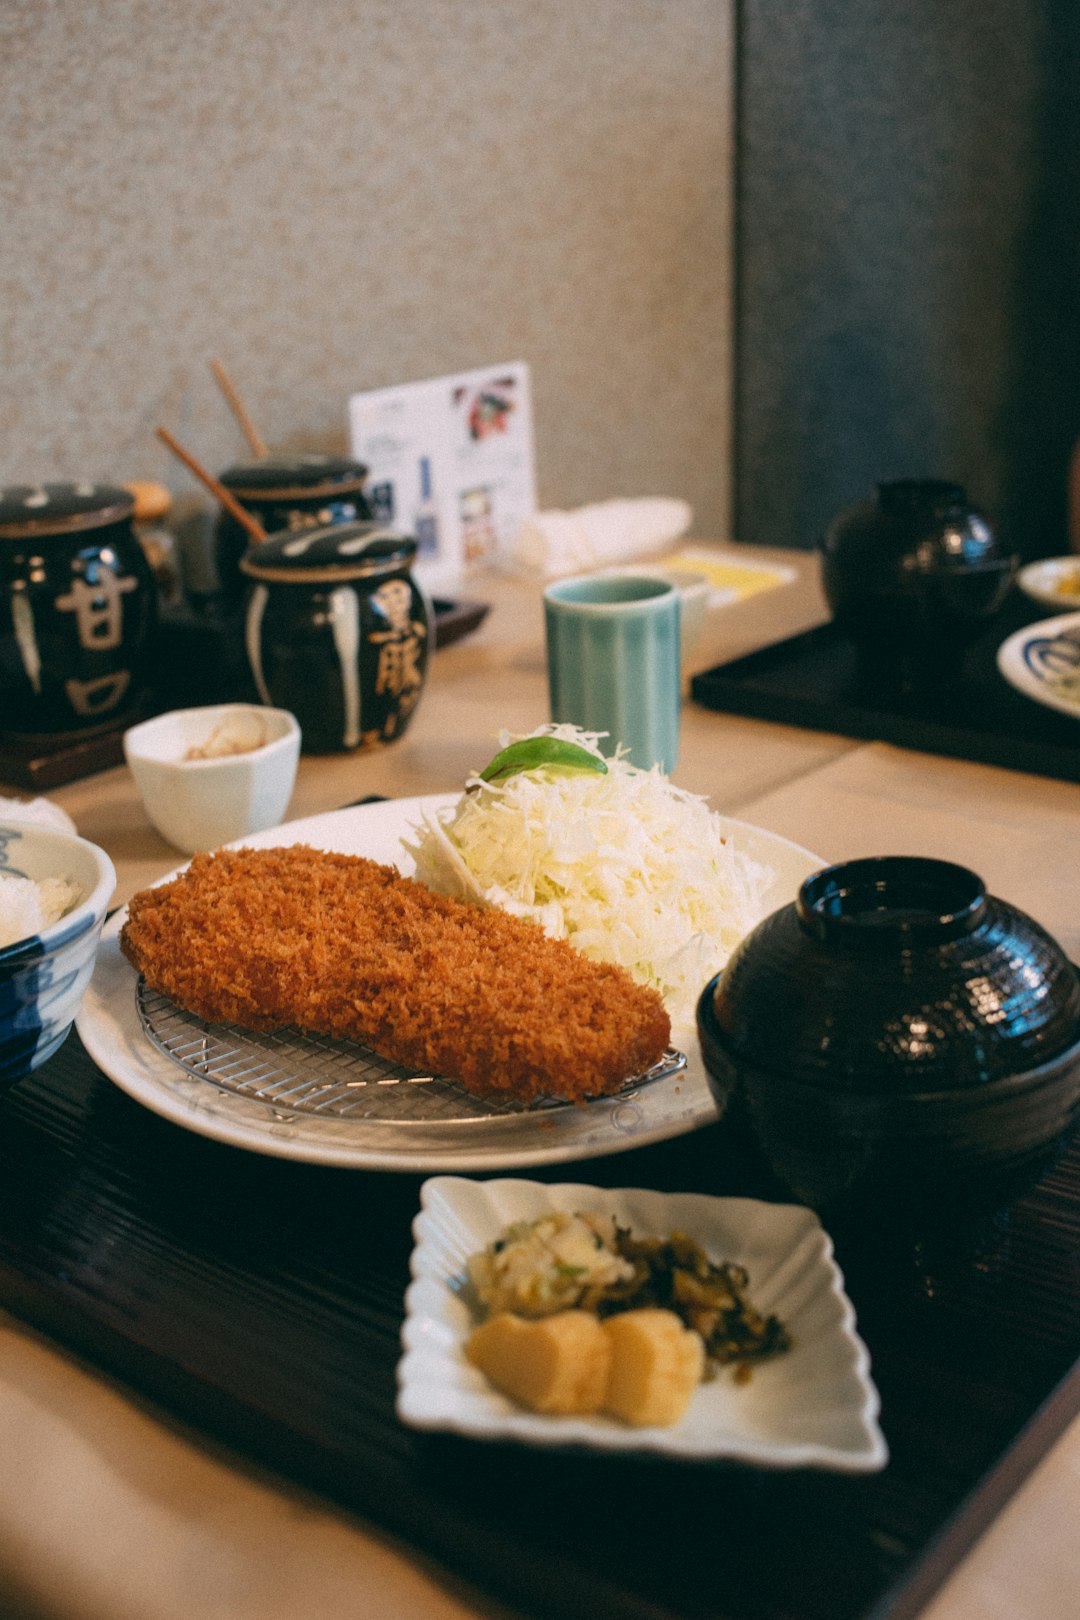 Tonkatsu (Japanese Pork Cutlet)